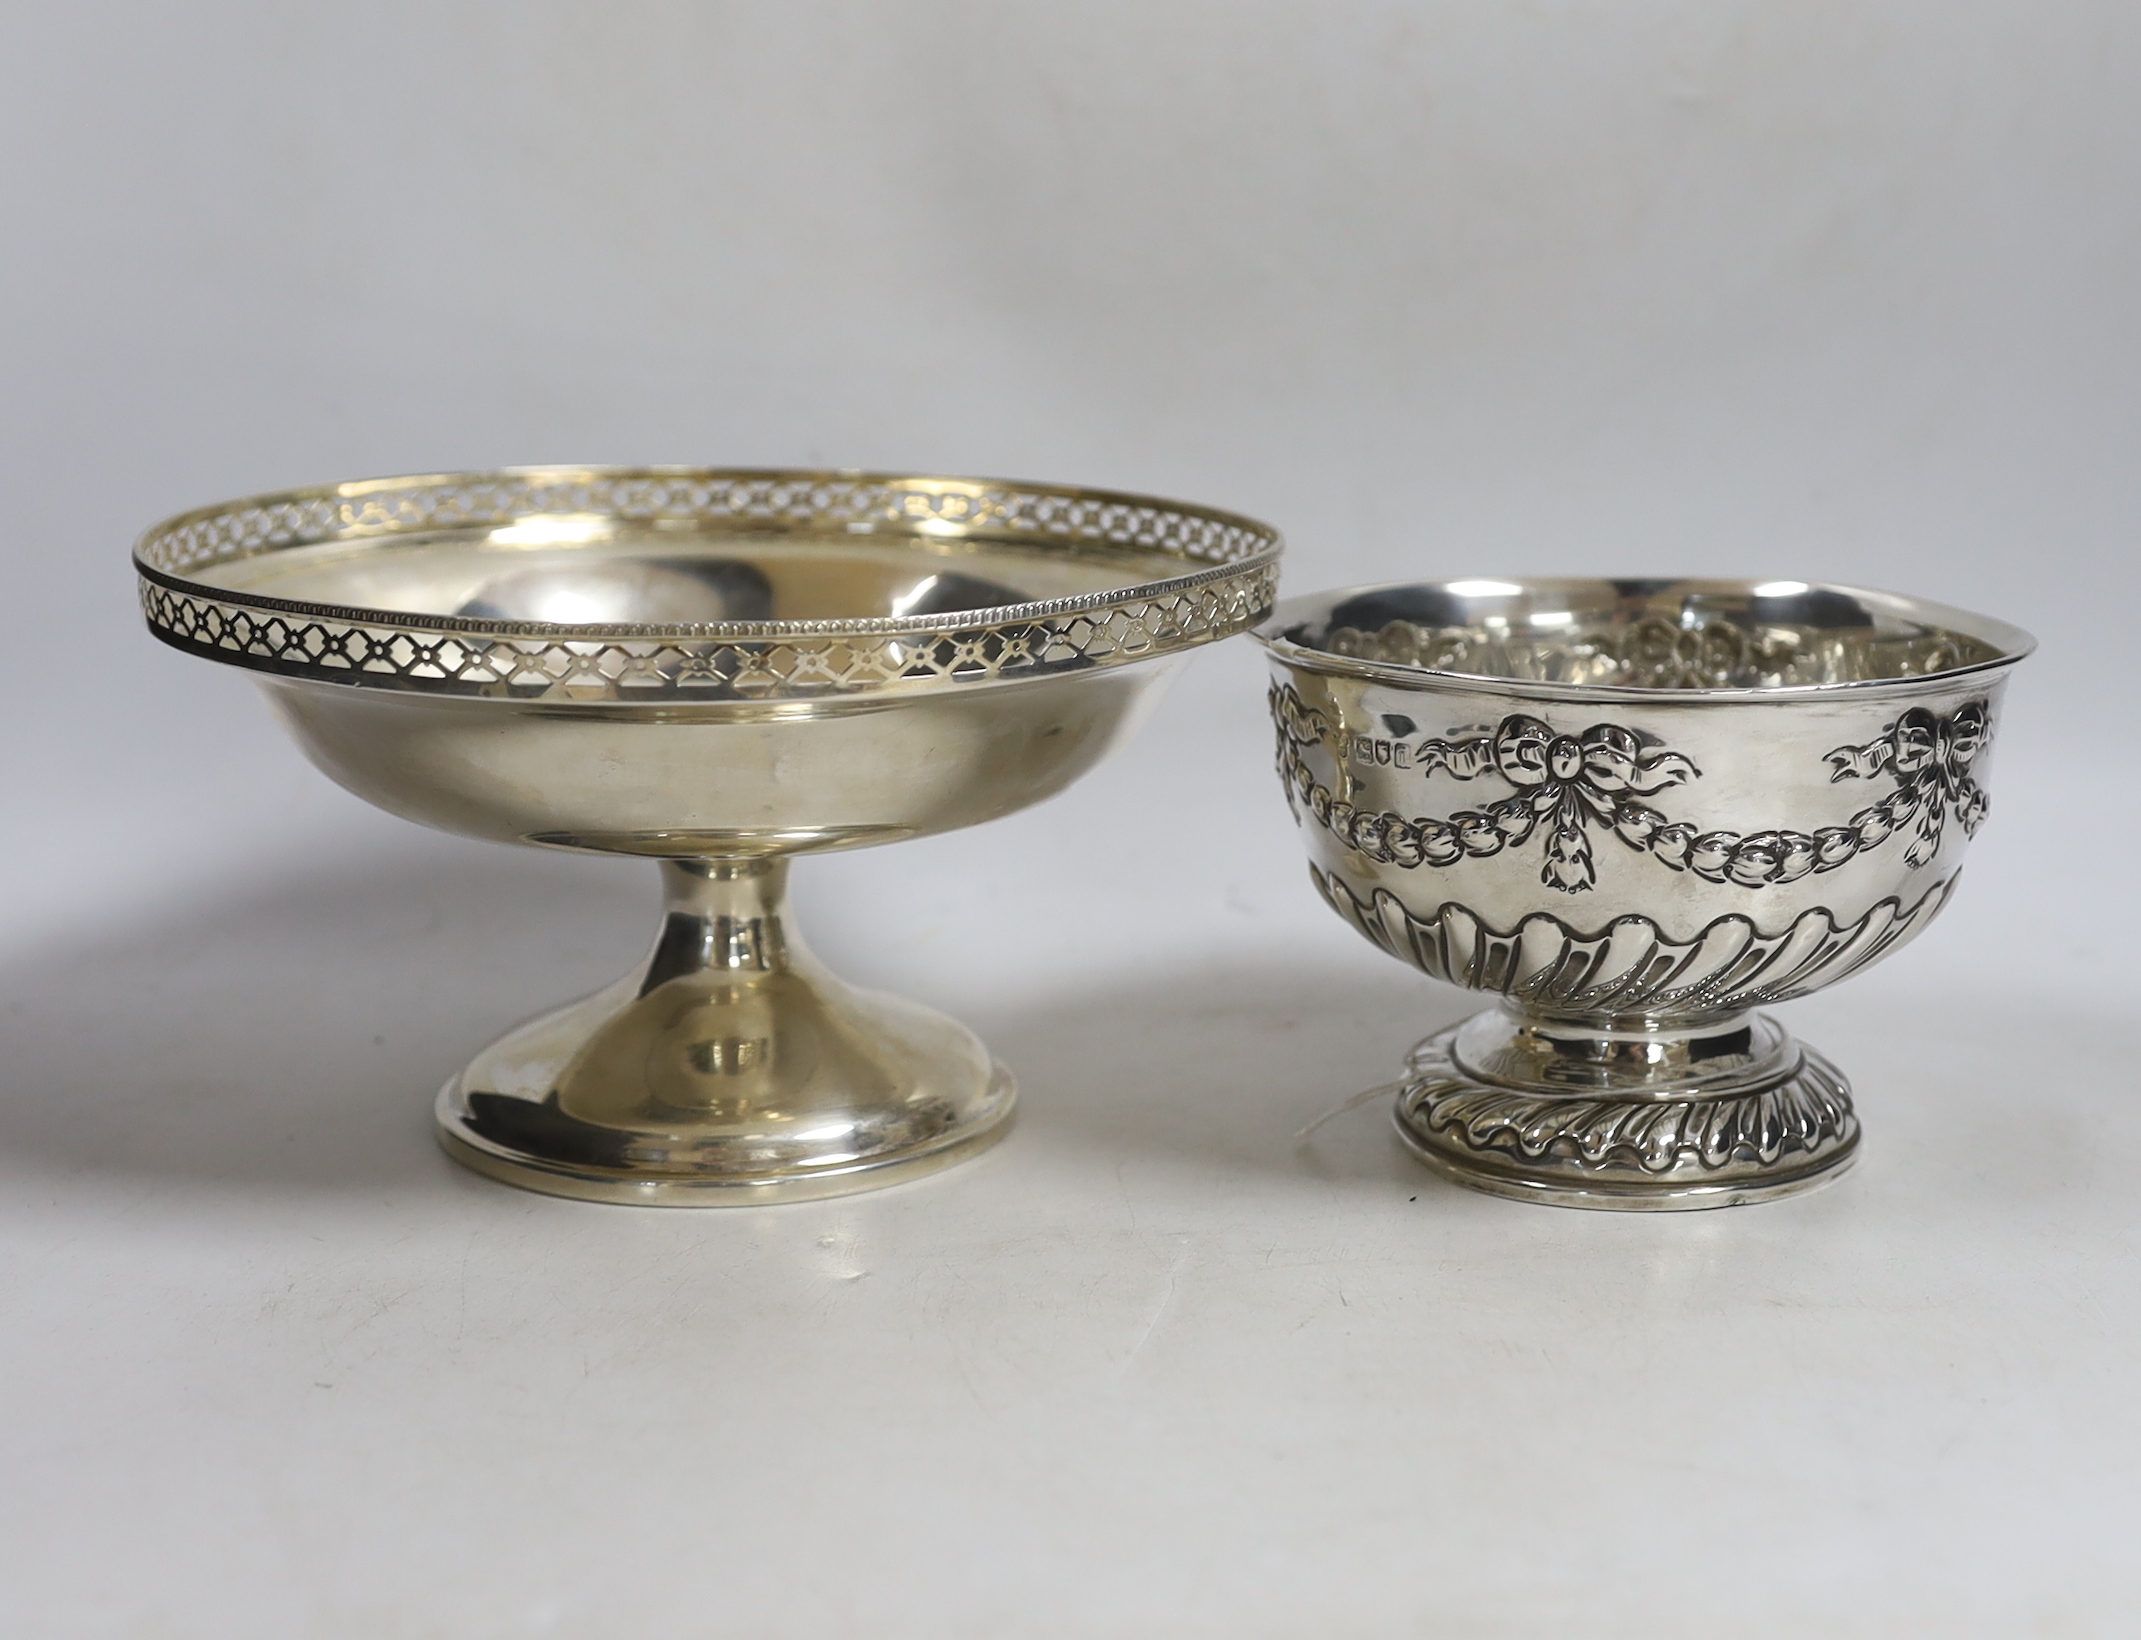 An Edwardian small repousse silver rose bowl, Charles Stuart Harris & Sons London, 1904, diameter 13.7cm and a later larger silver pedestal bowl, 15.3oz.